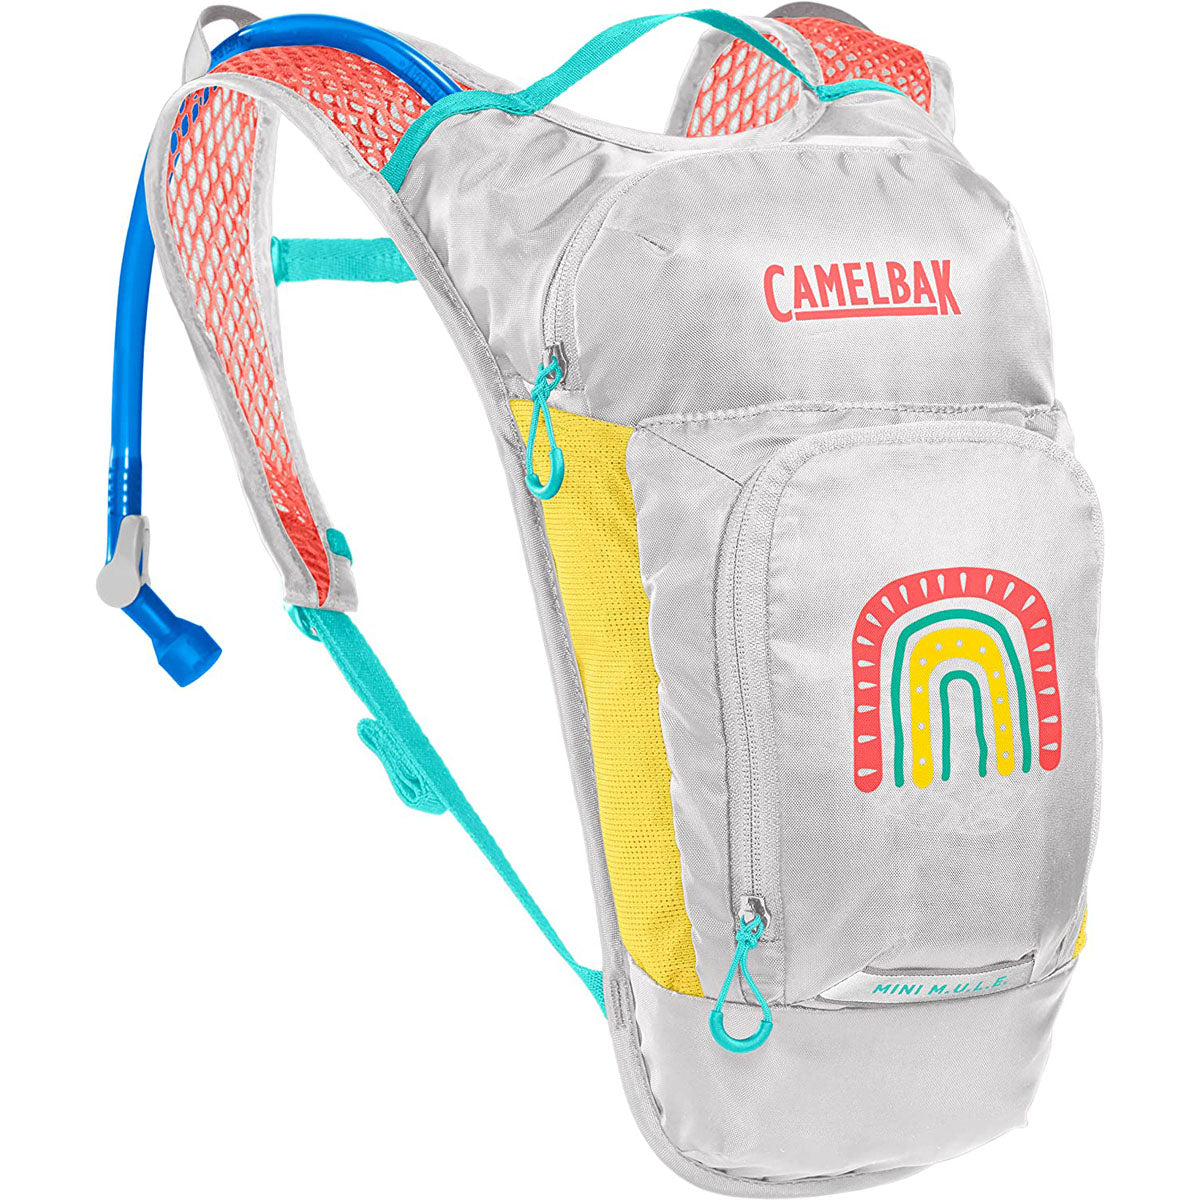 Camelbak Kids Mini Mule 50oz. Hydration Backpack